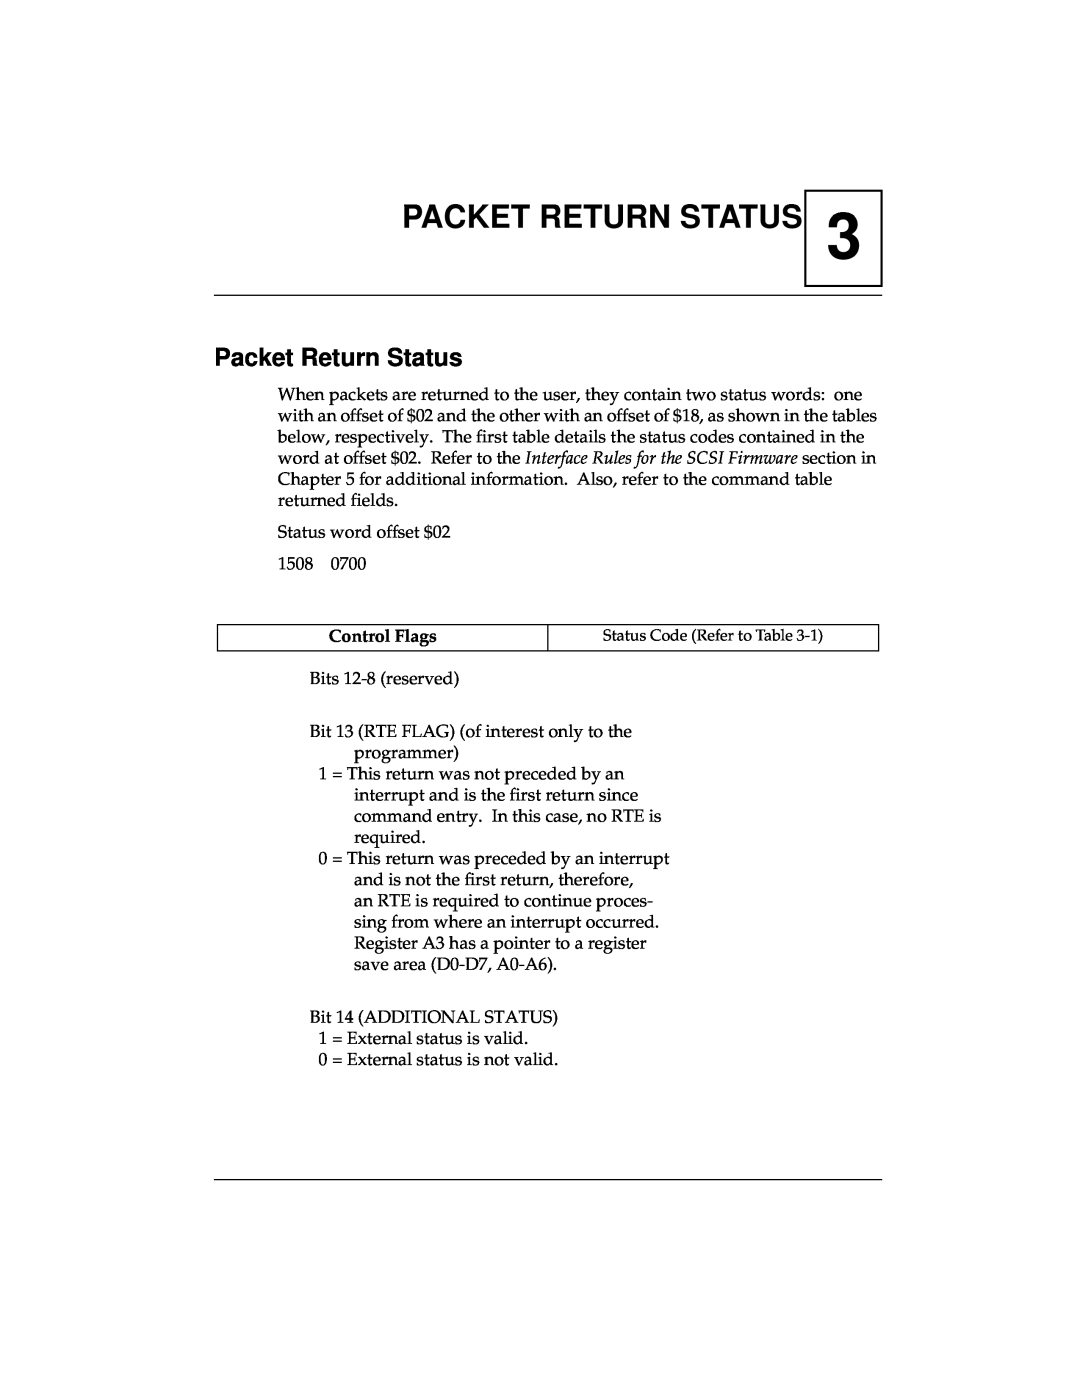 Emerson MVME147 manual Packet Return Status, Control Flags 